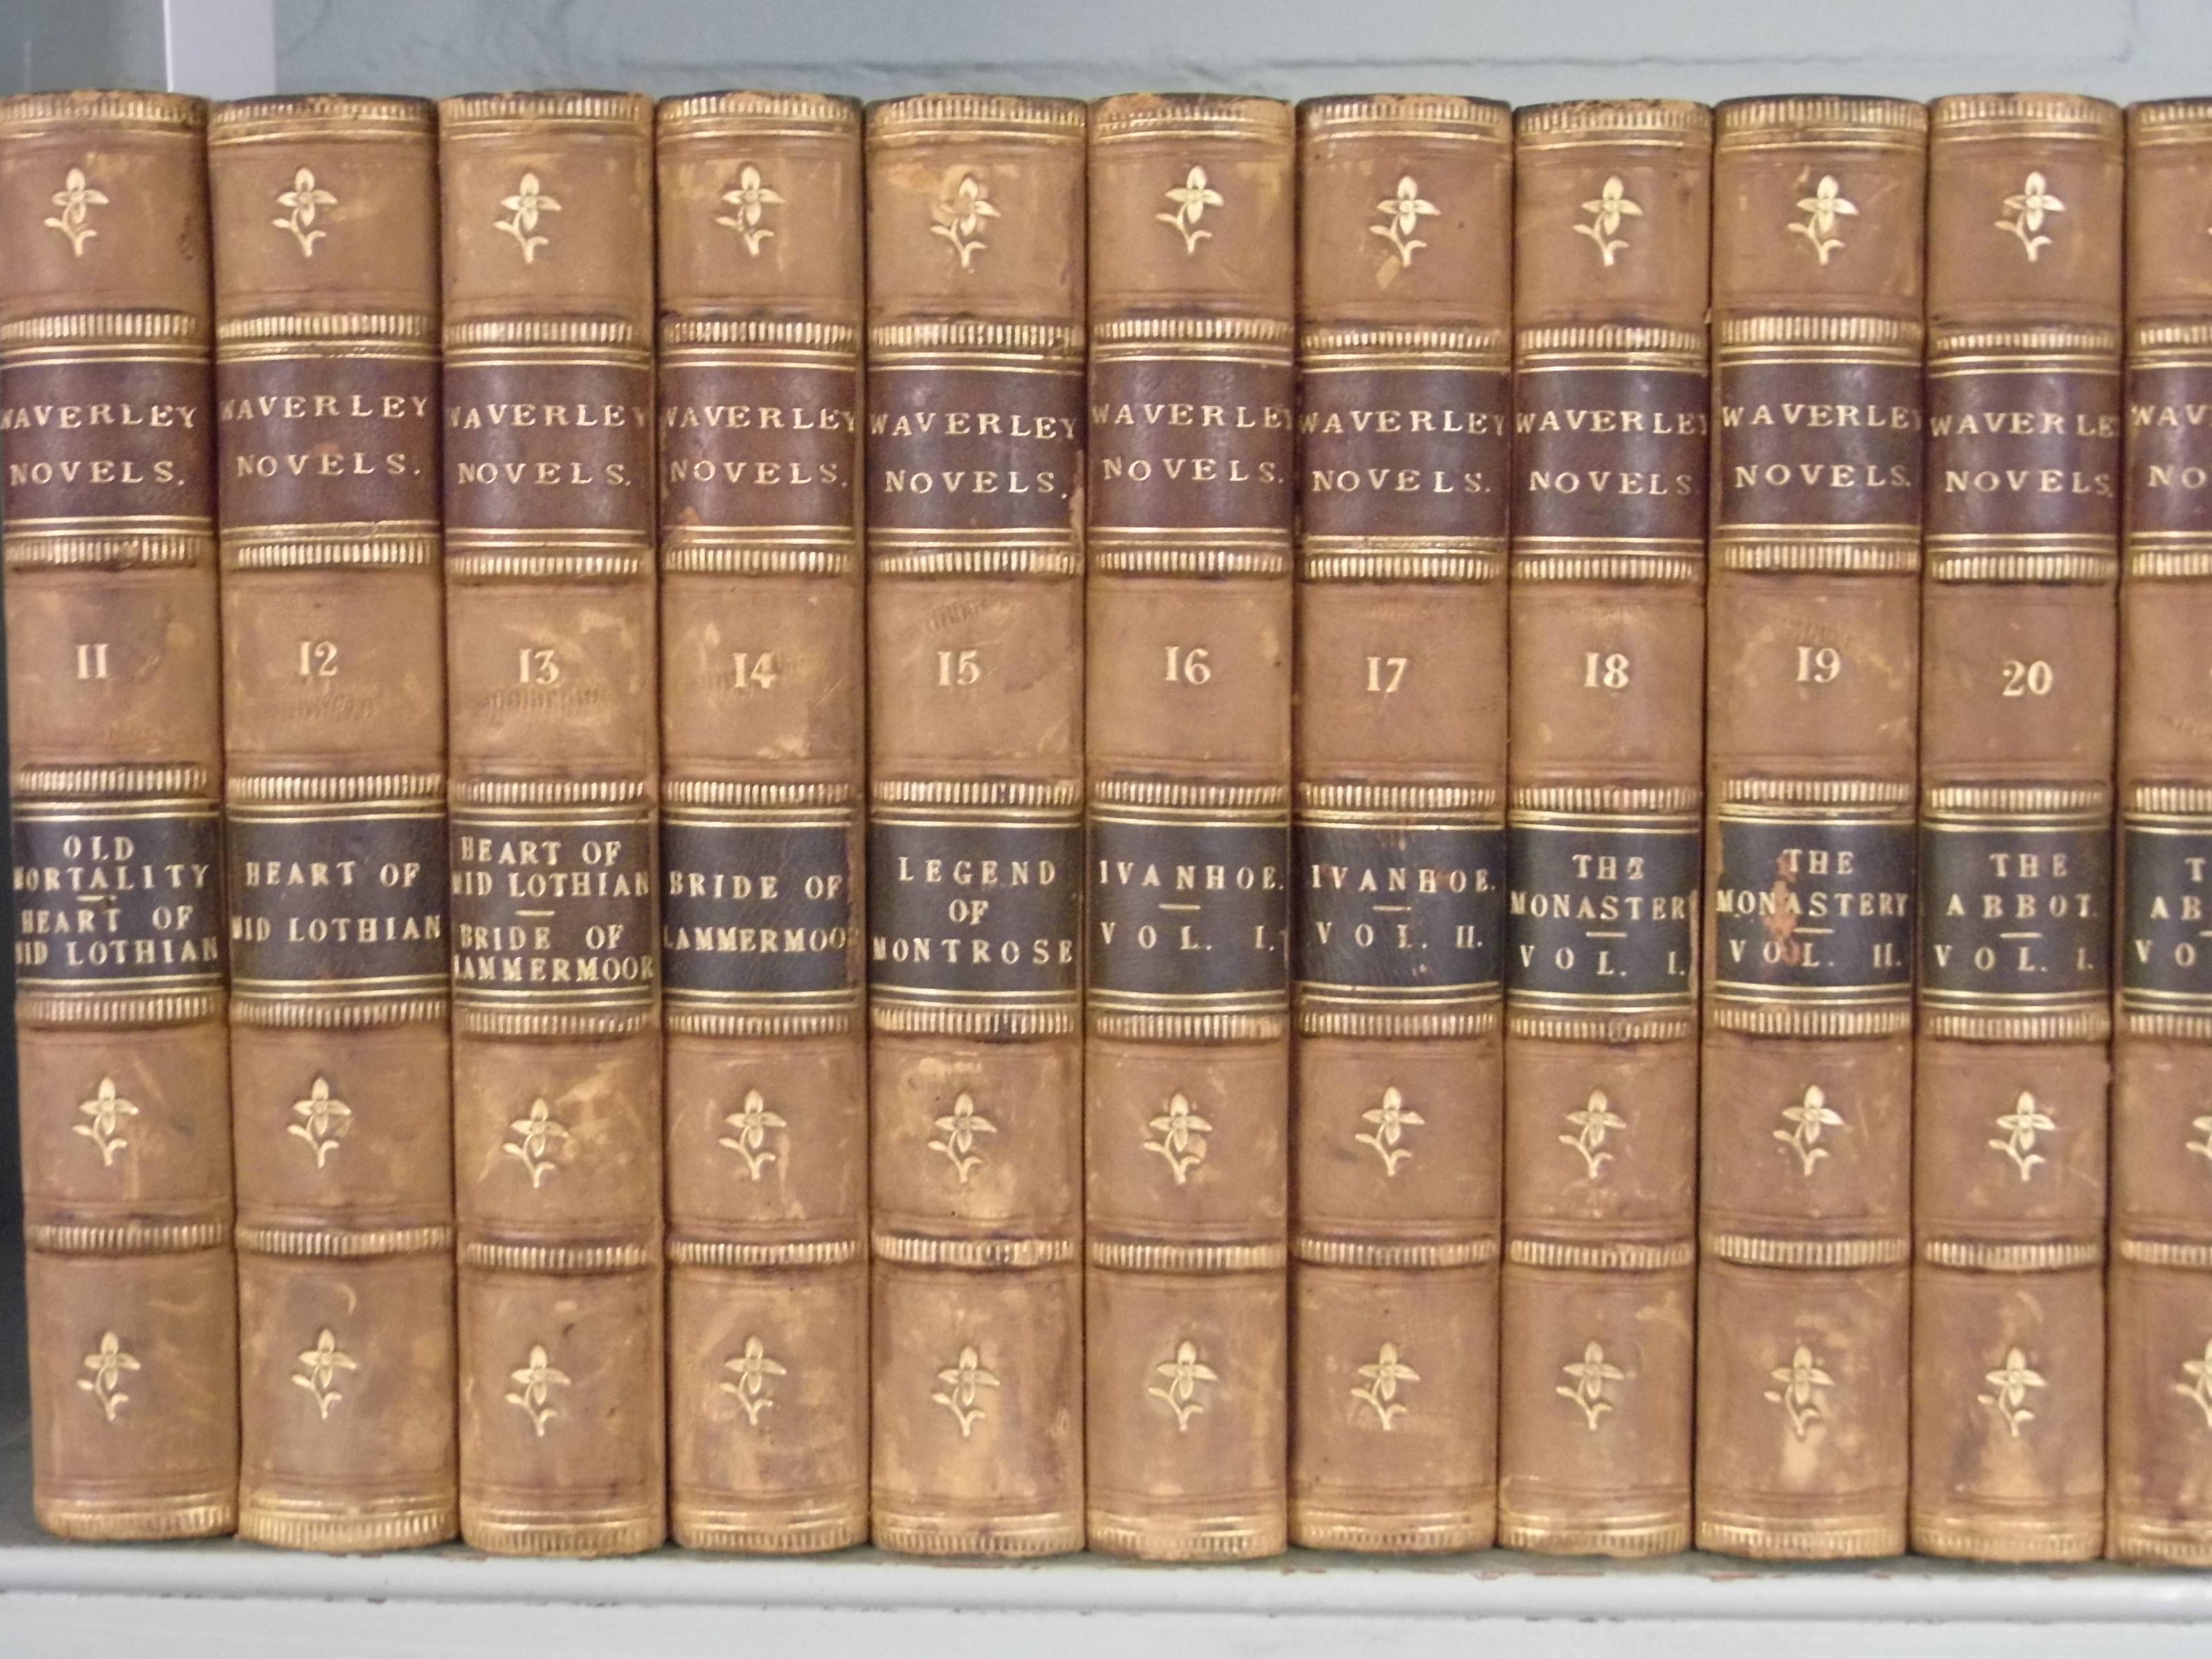 Scott (Walter). Waverley Novels, volumes 11-27 & 39-48 only, Edinburgh & London: Cadell, engraved